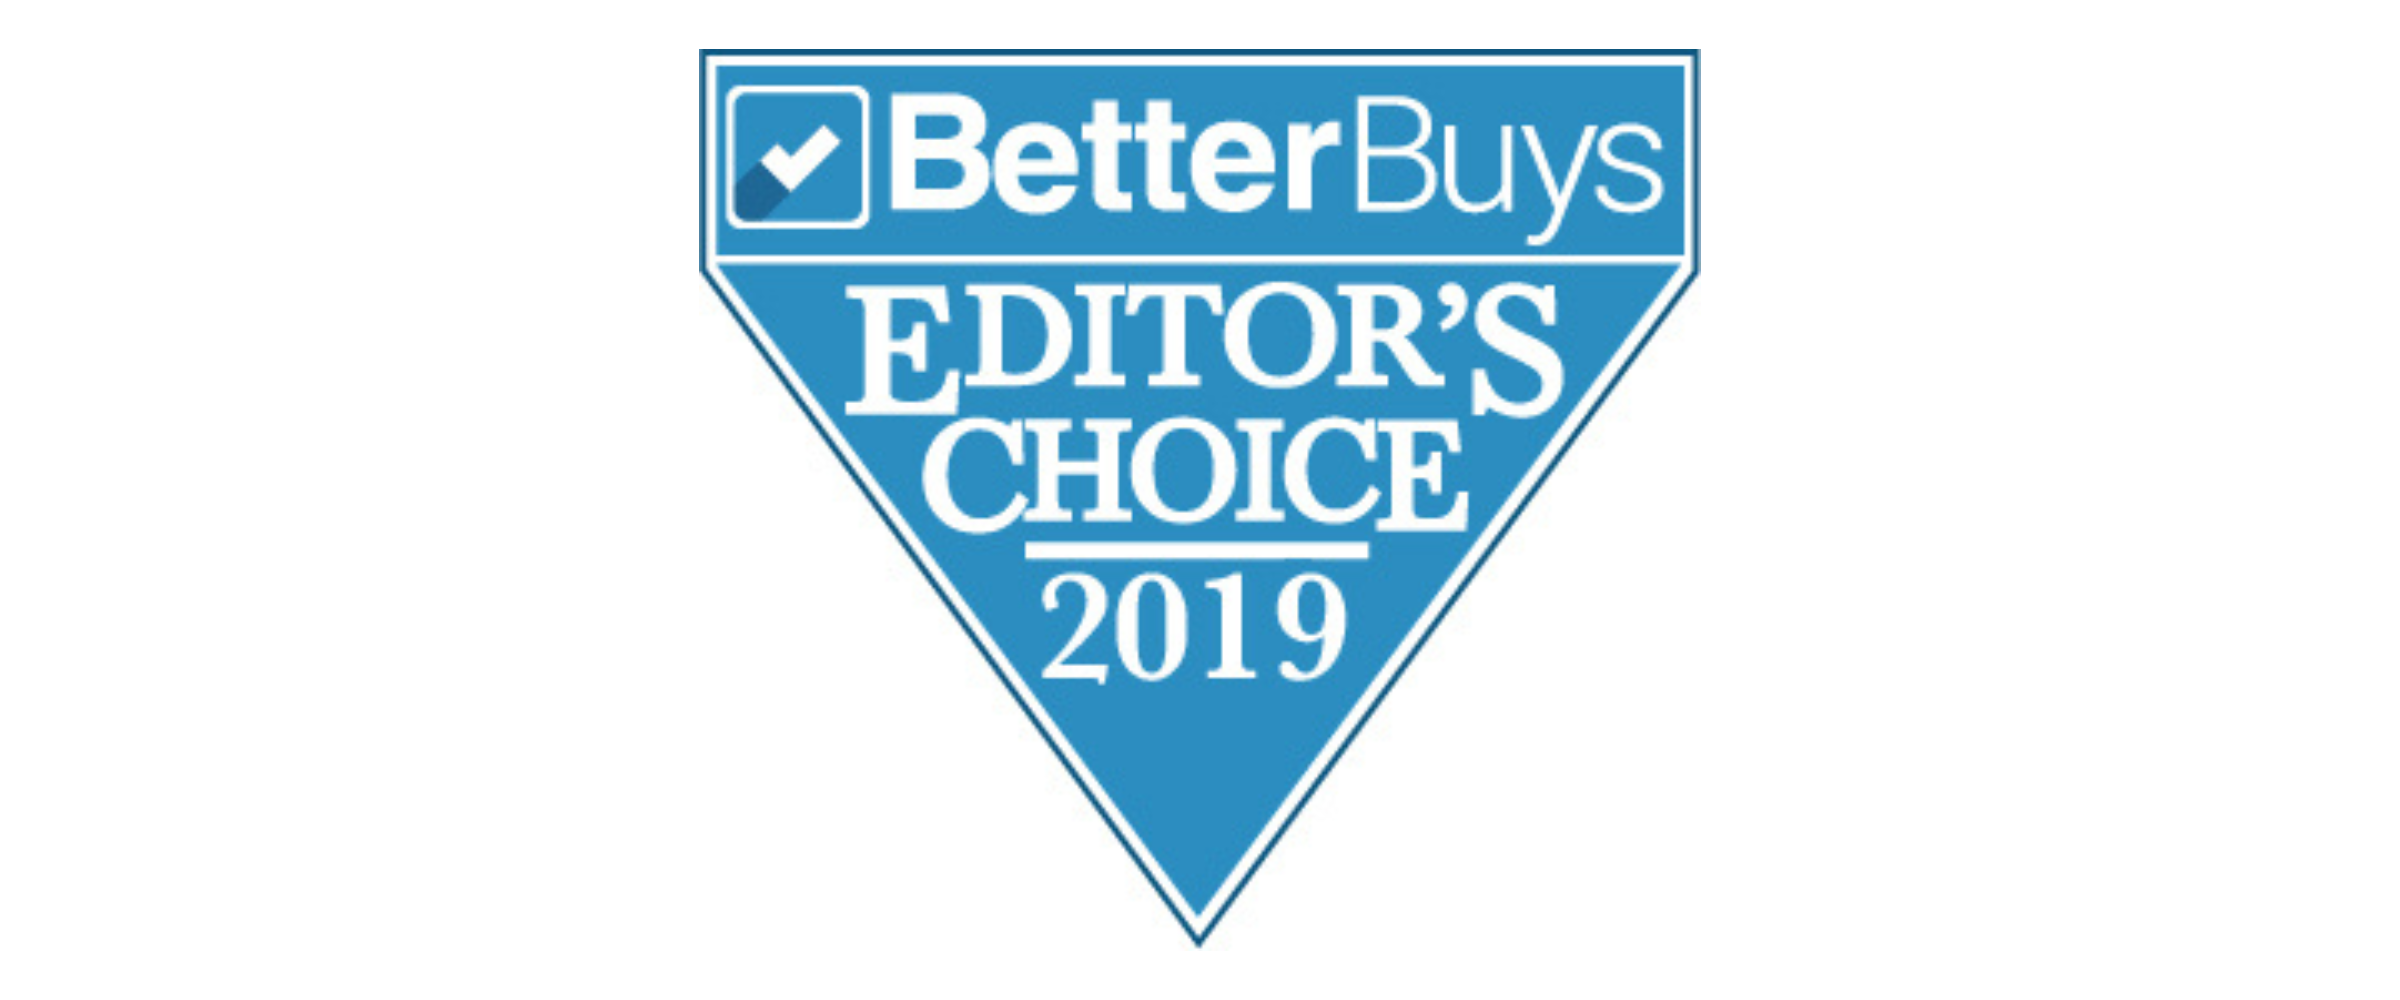 Better Buys Q1 2019 Editors Choice Award